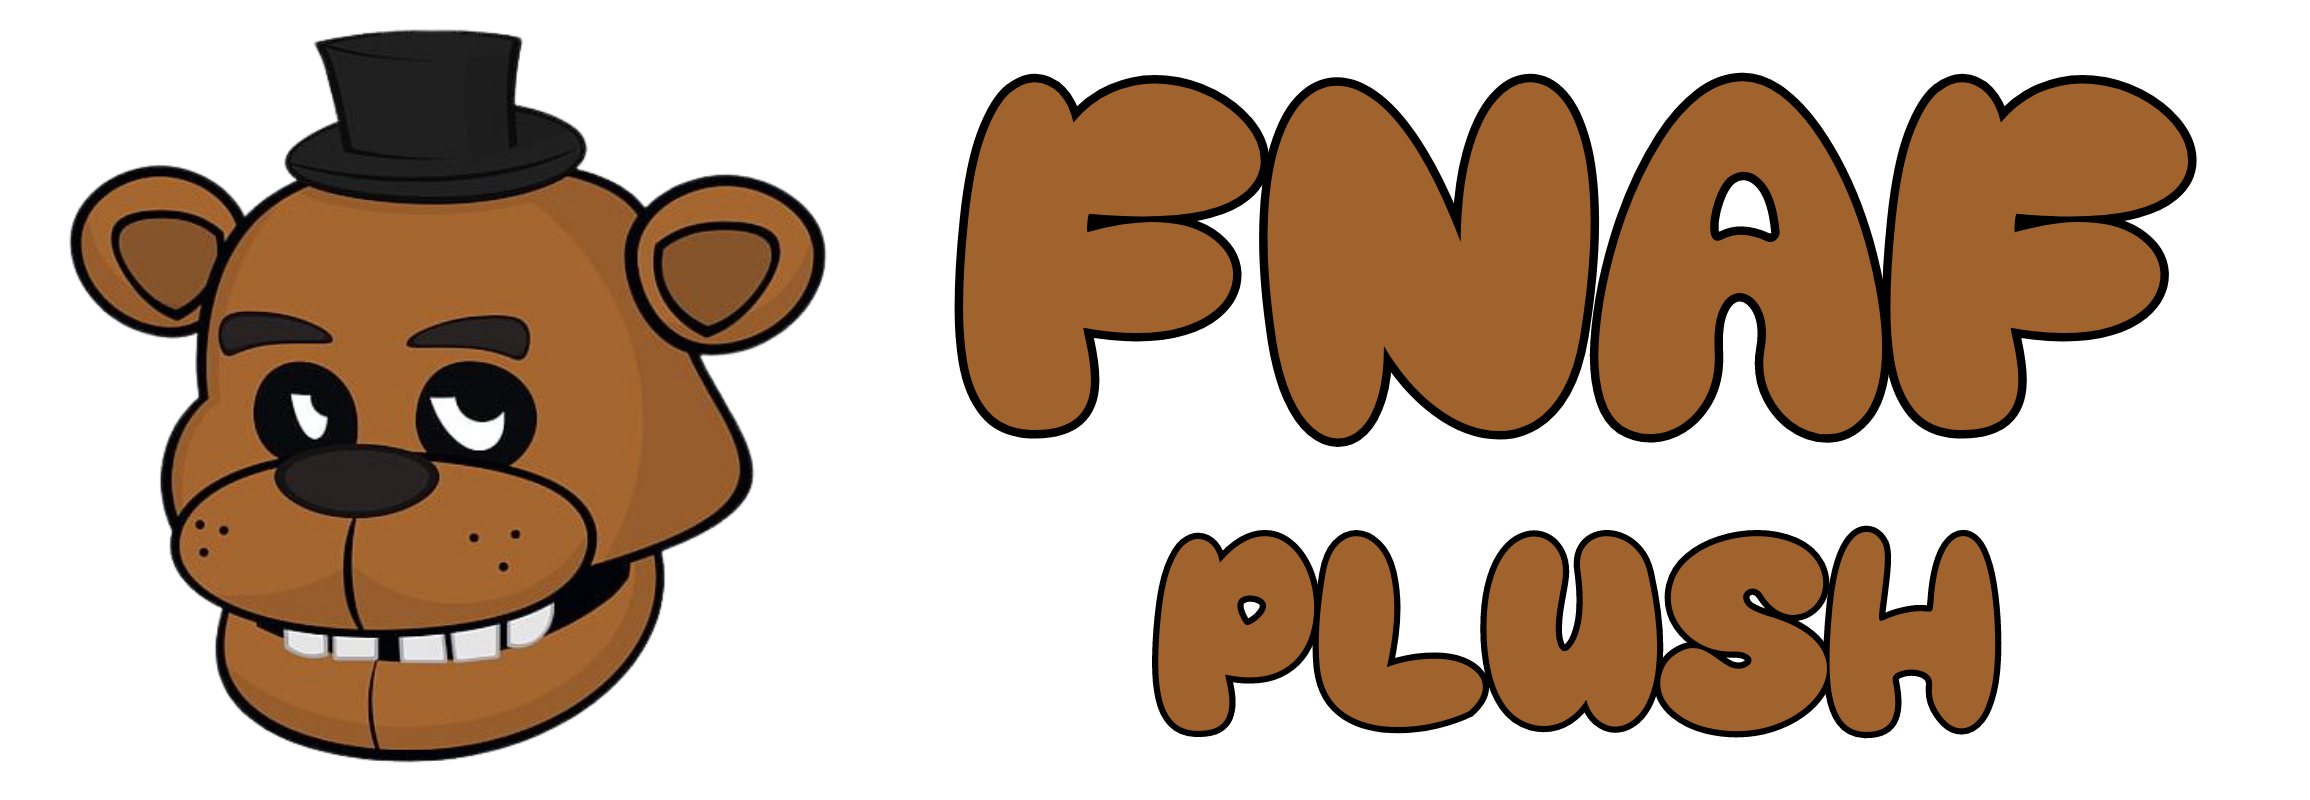 fnaf plush logo1 - FNAF Plush